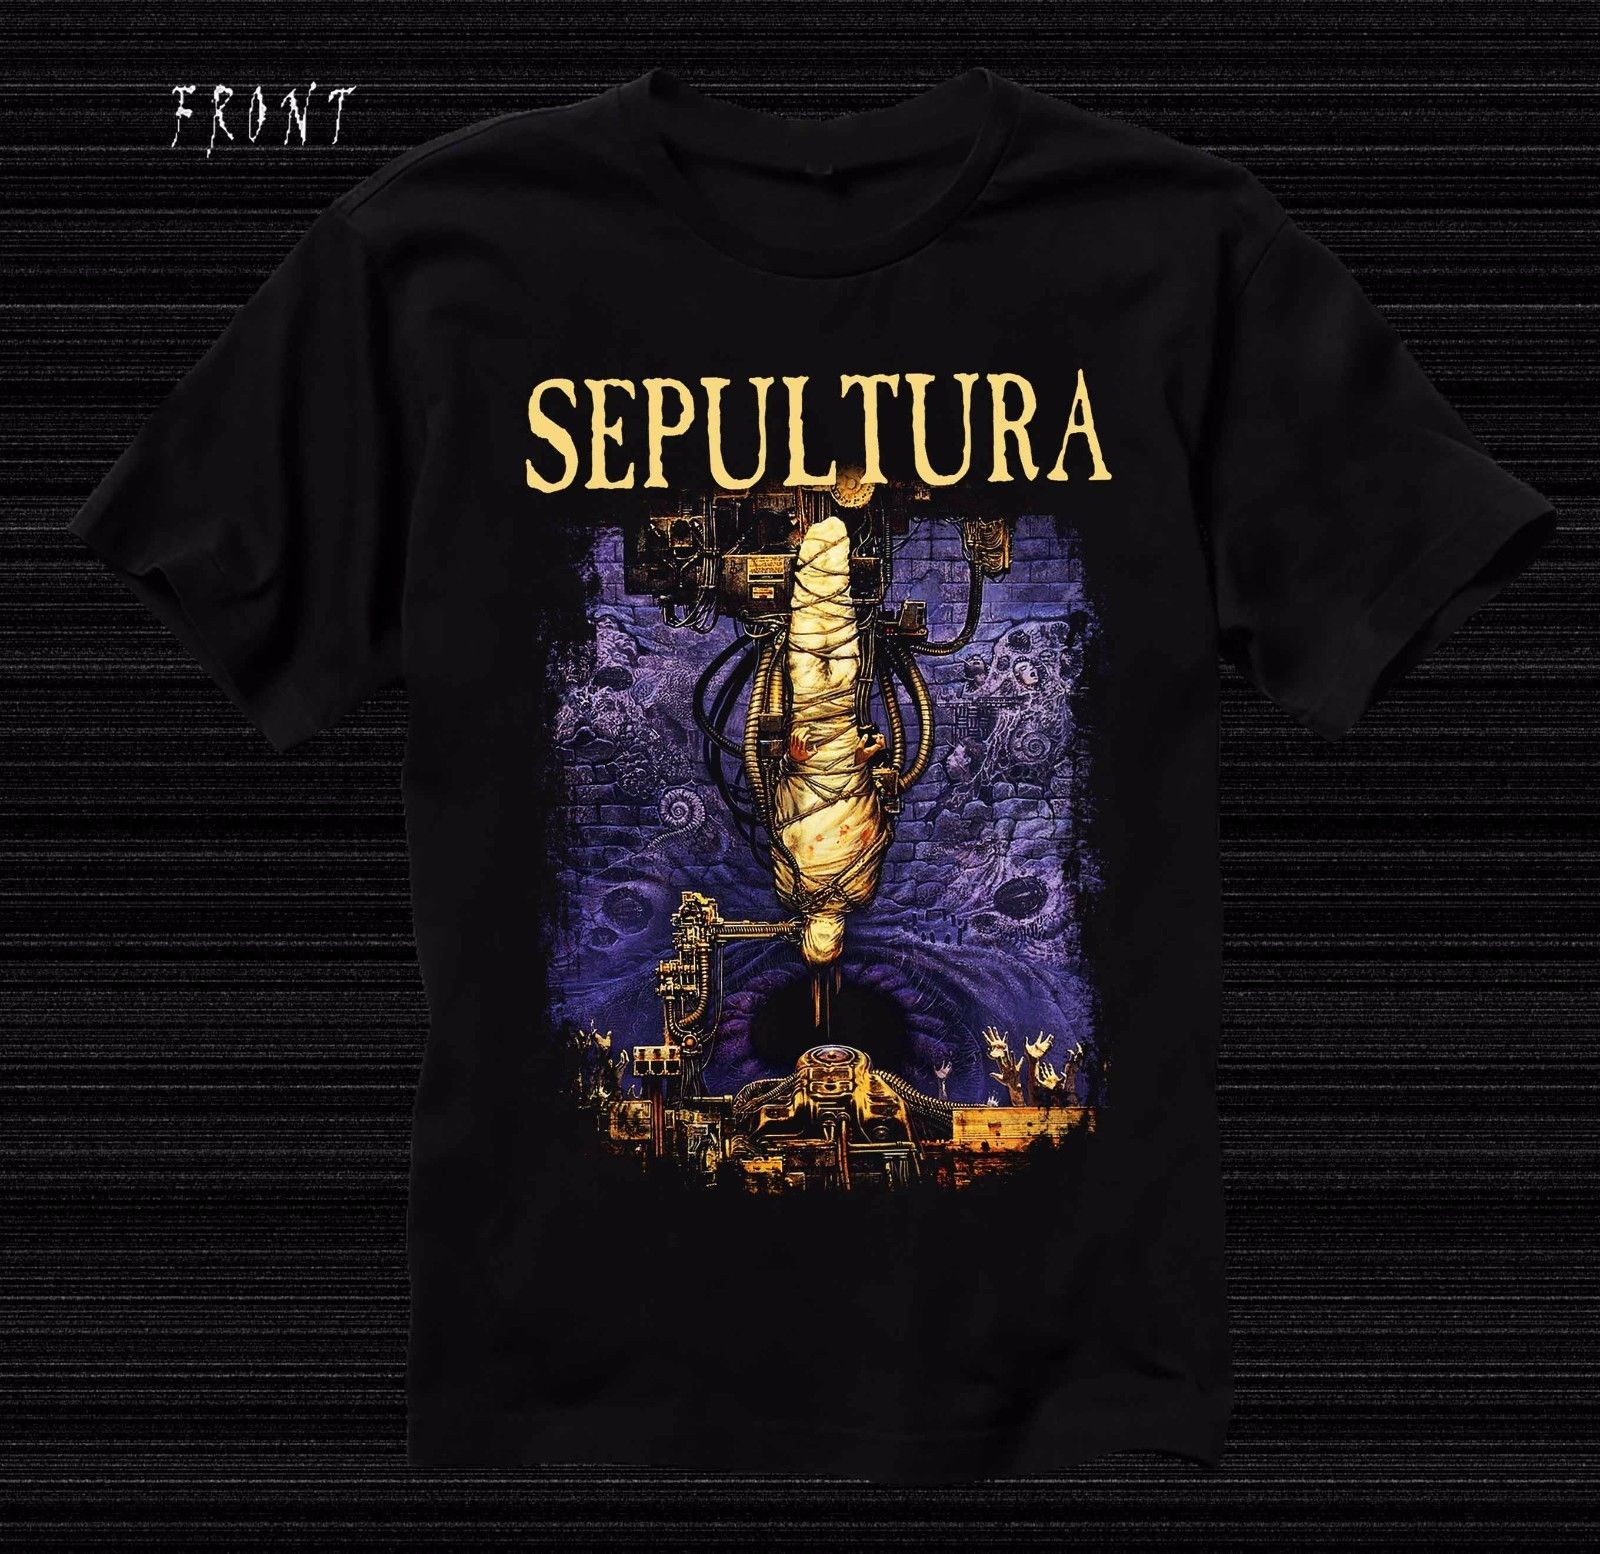 SEPULTURA - Chaos A.D. - Brazilian Heavy Metal Band T-Shirt